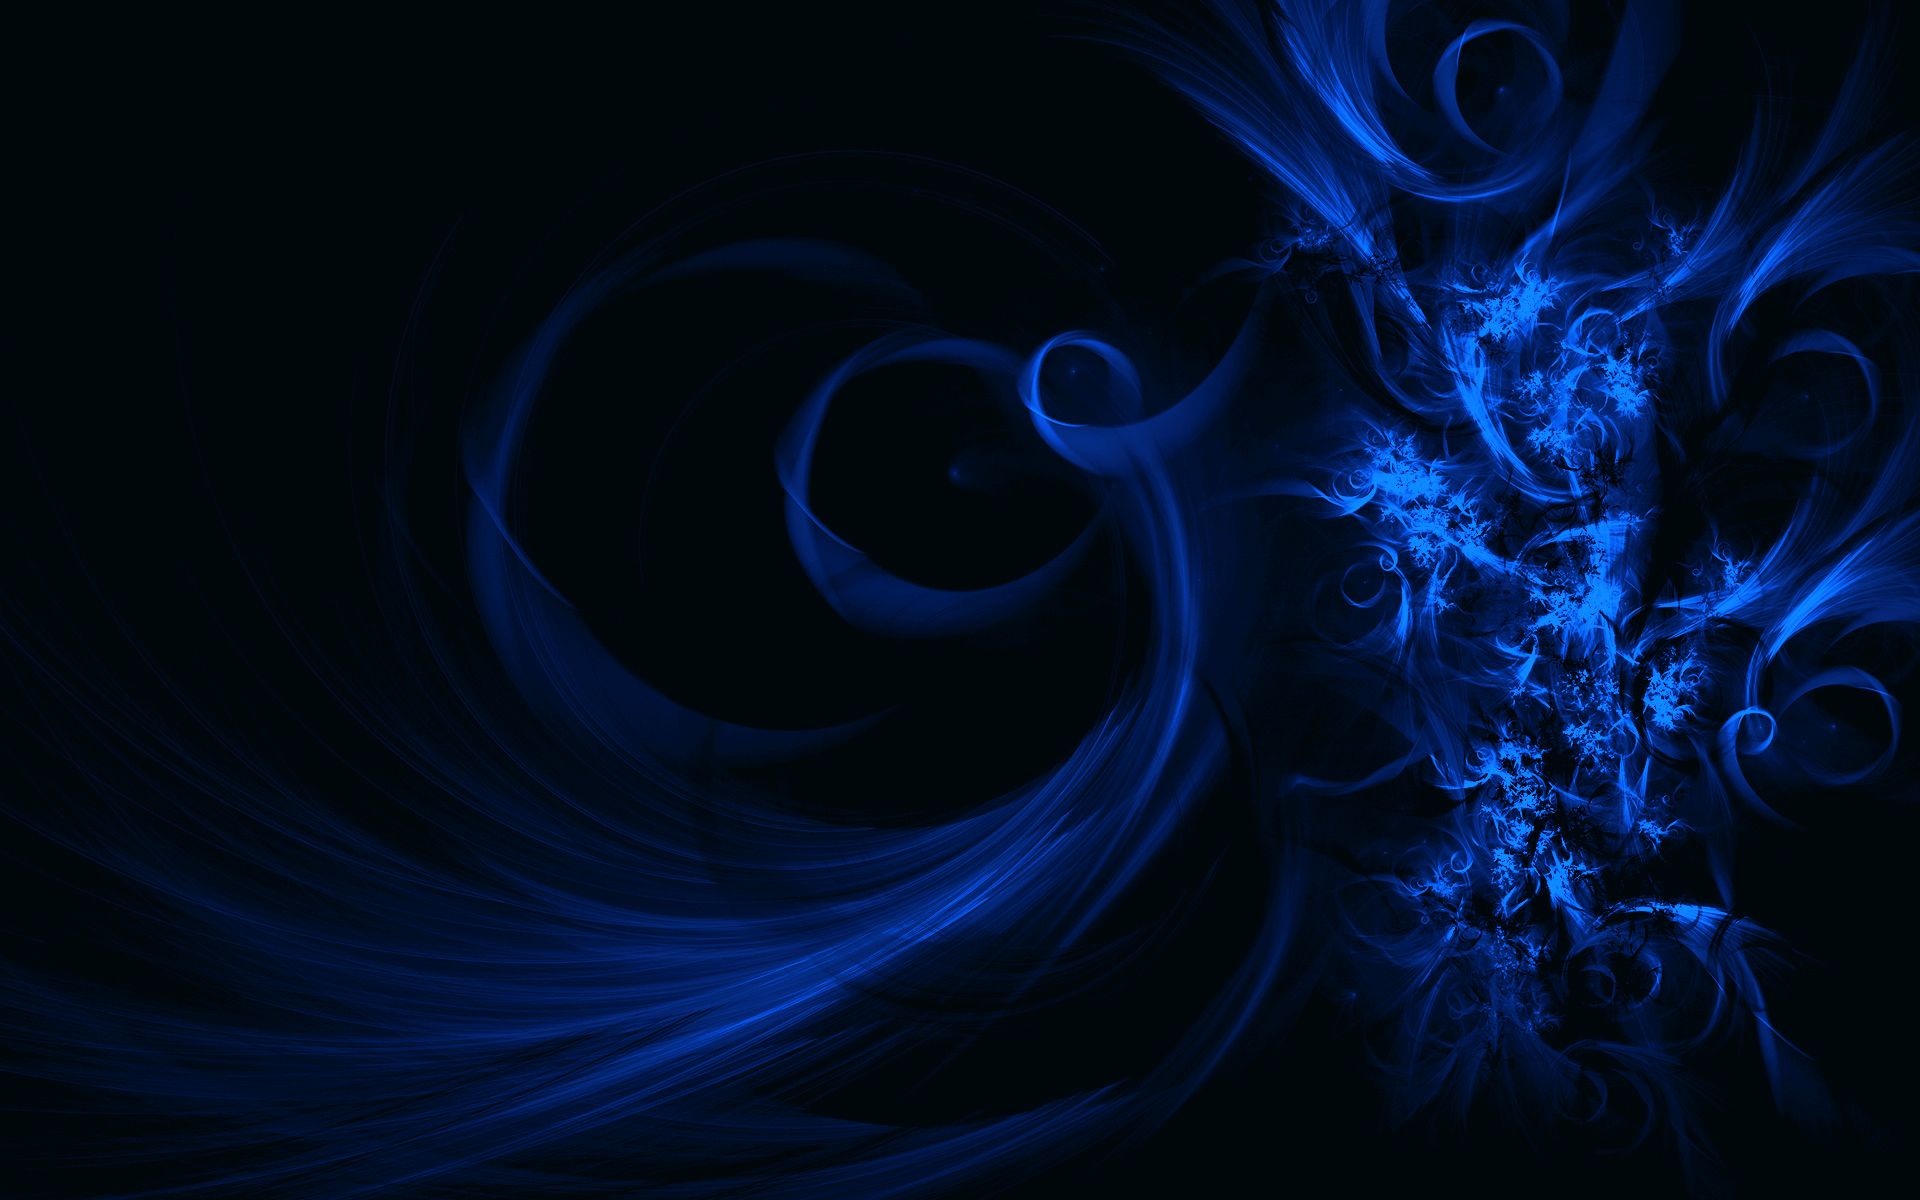 Blue Swirls Abstract wallpaper. Blue Swirls Abstract